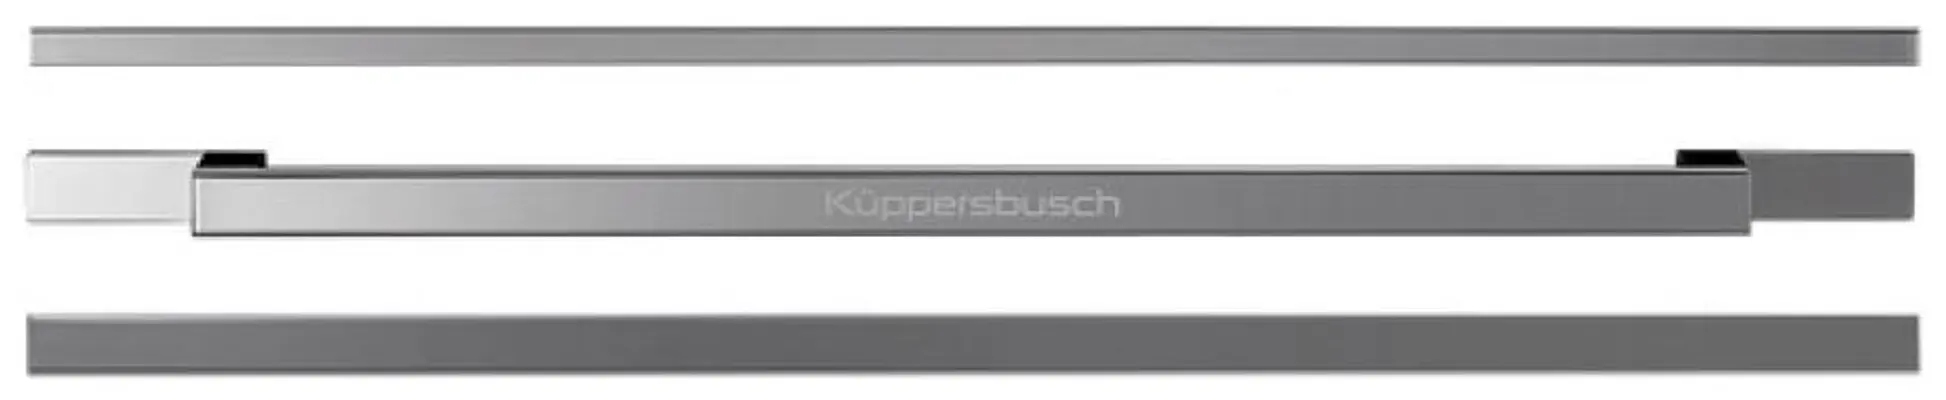 DK3000-Kuppersbusch-Koel-vries-accessoires